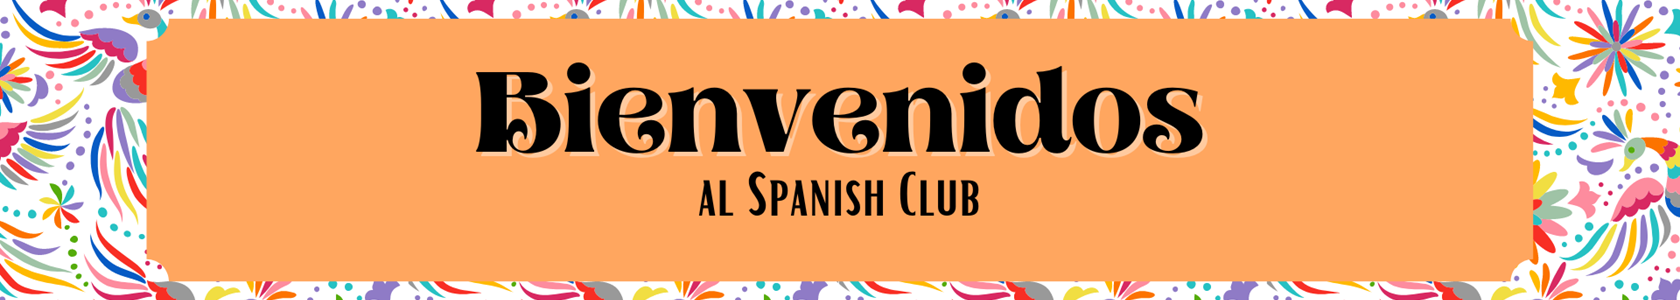 Spanish club banner